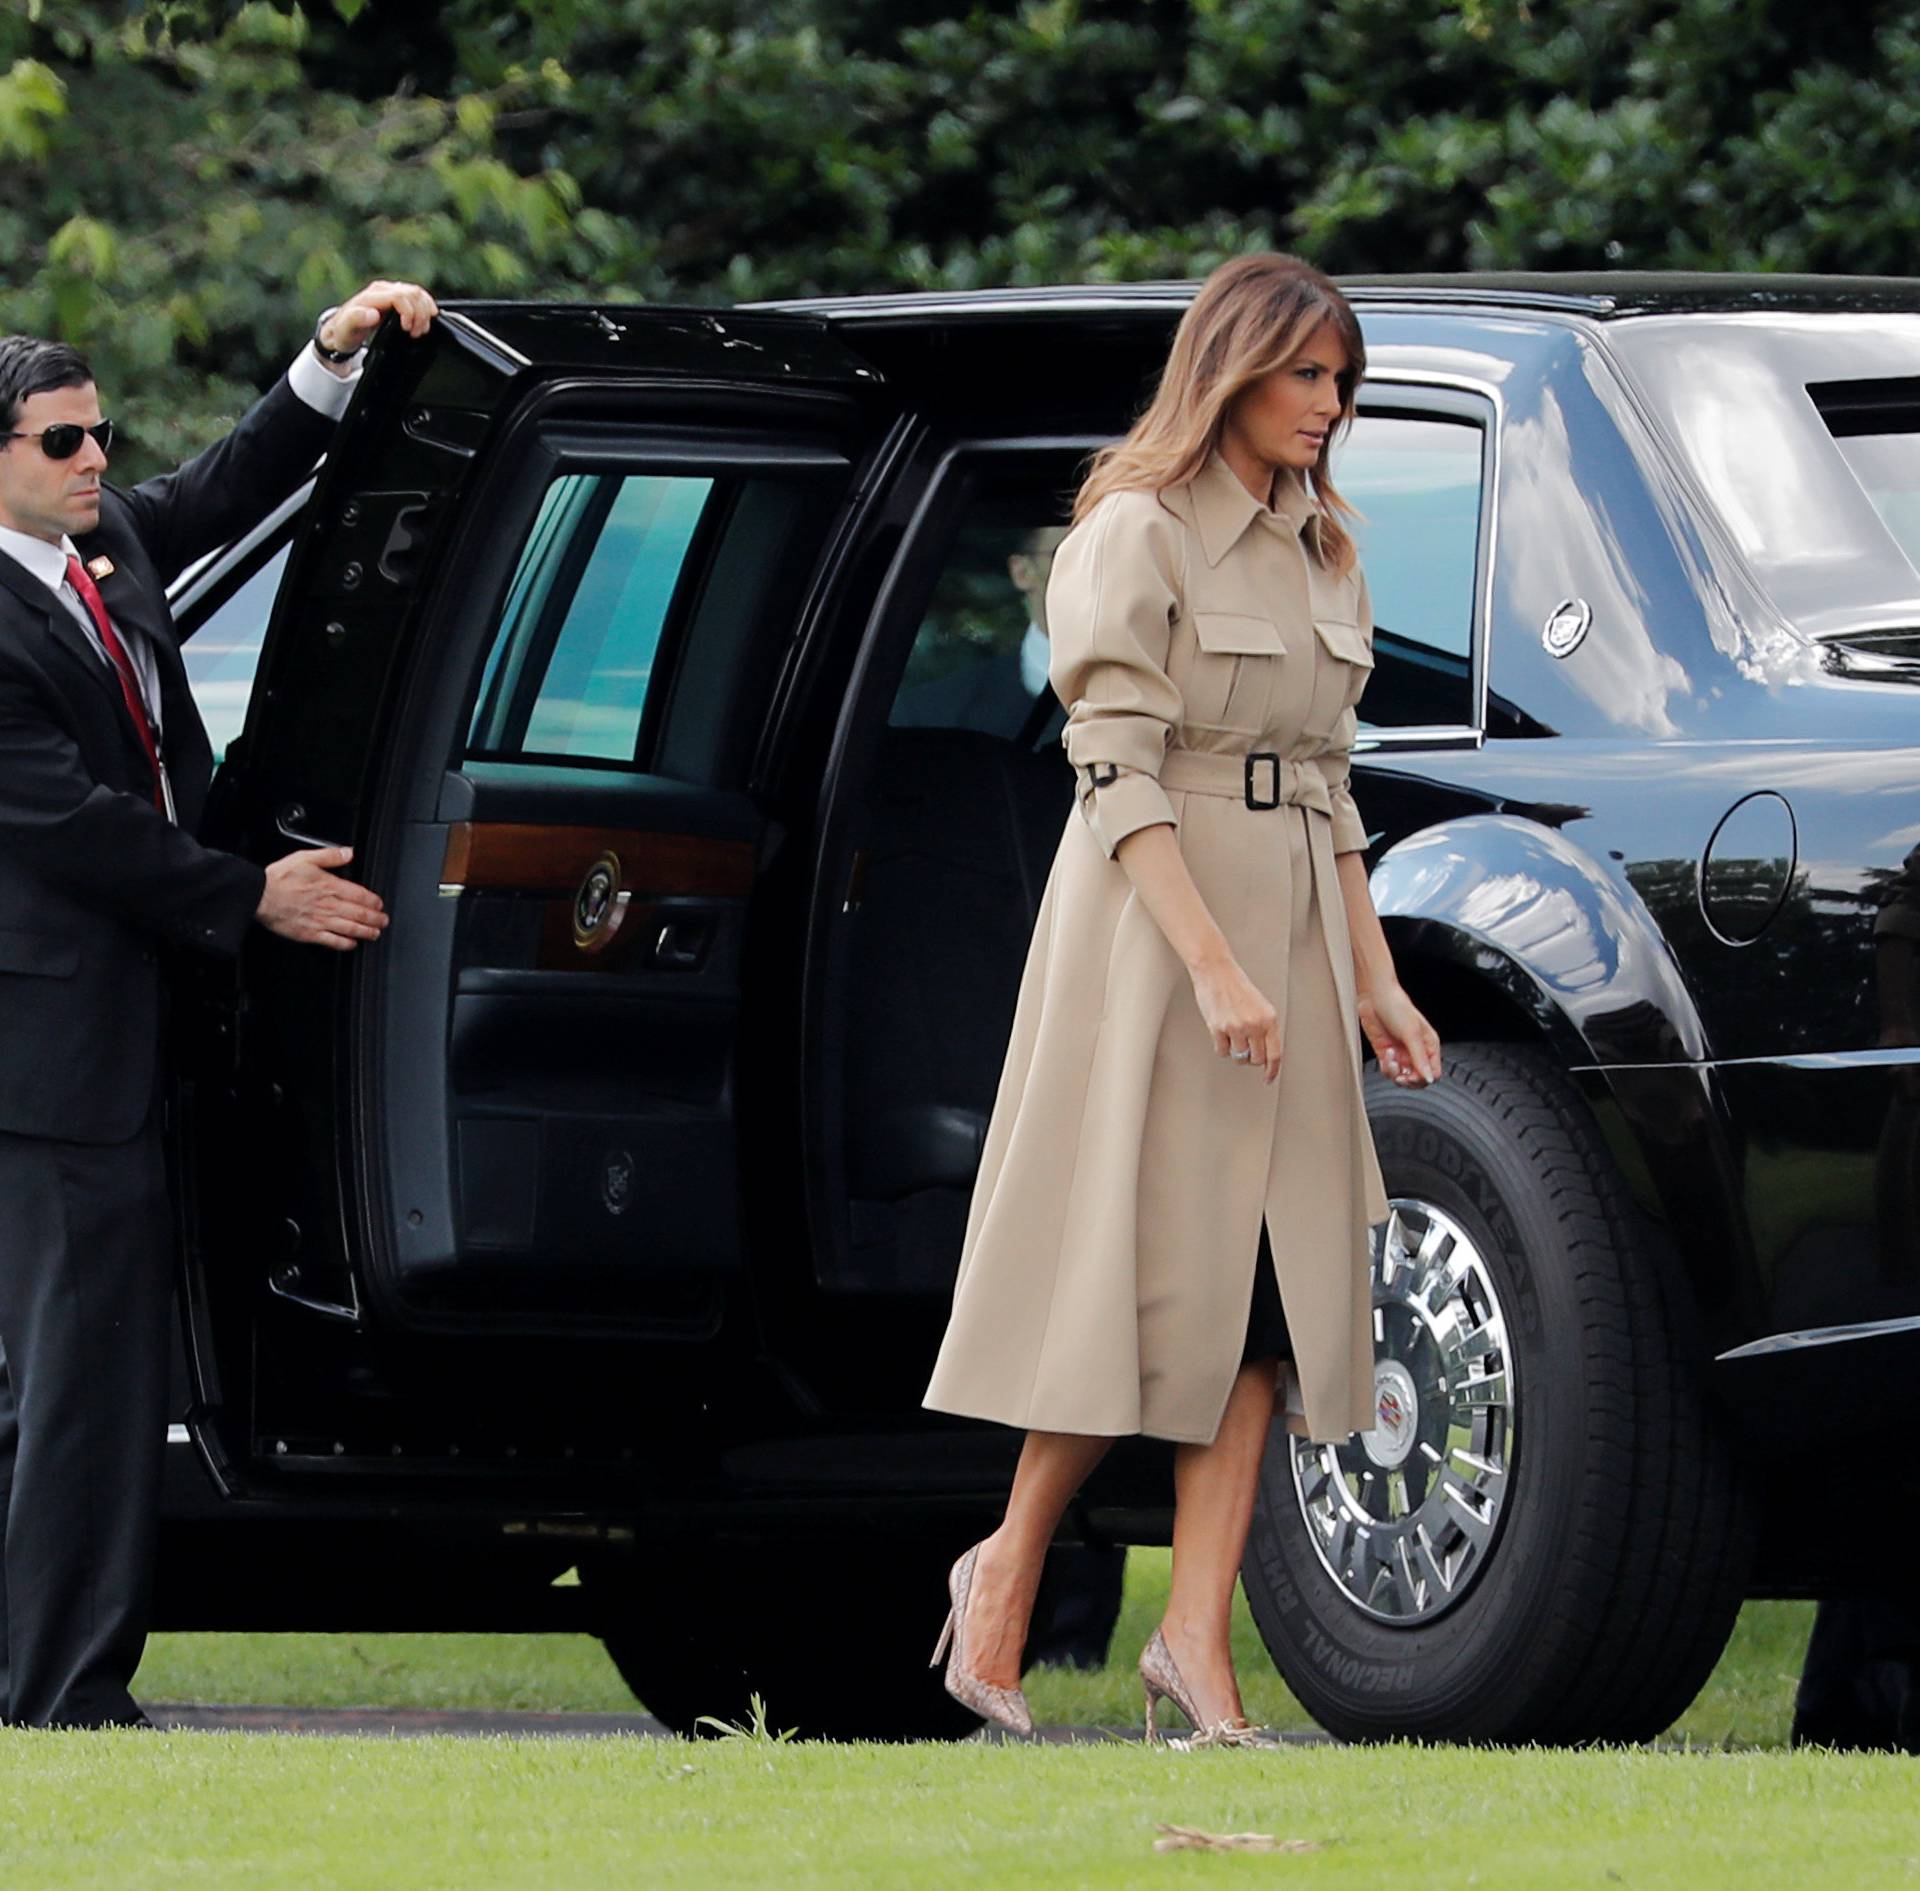 First lady Melania Trump returns to White House with President Trump in Washington